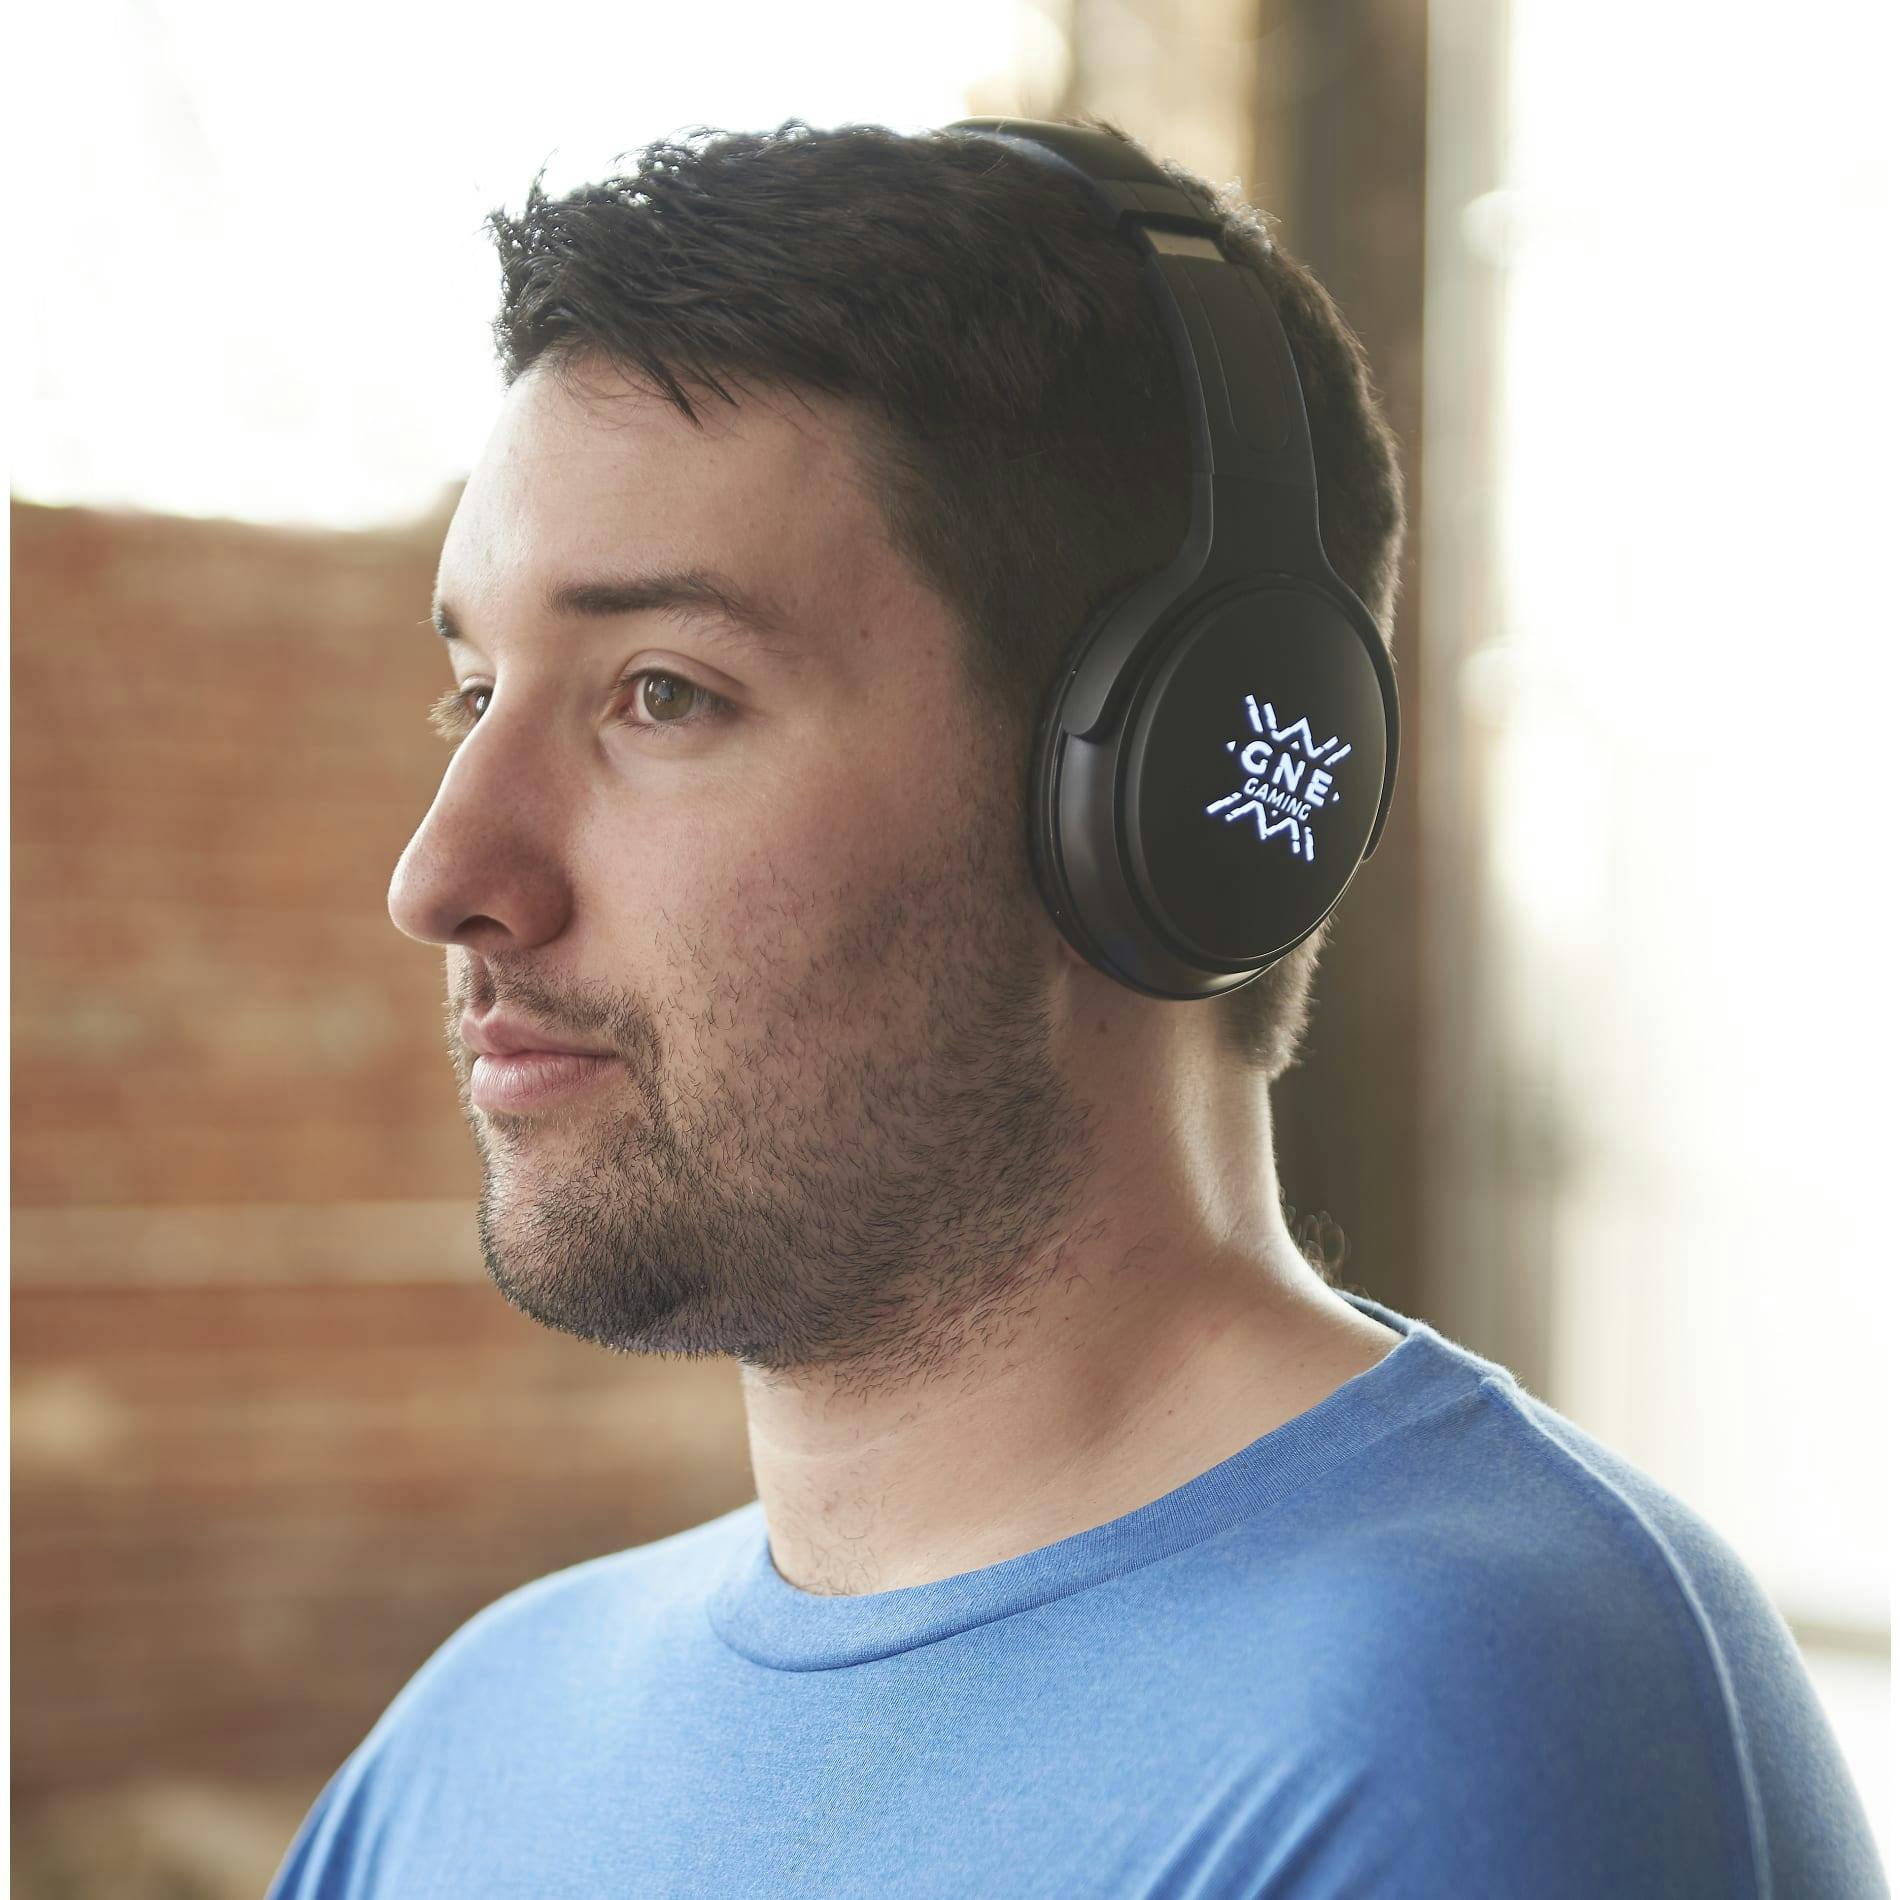 Light Up Logo Bluetooth Headphones - additional Image 1